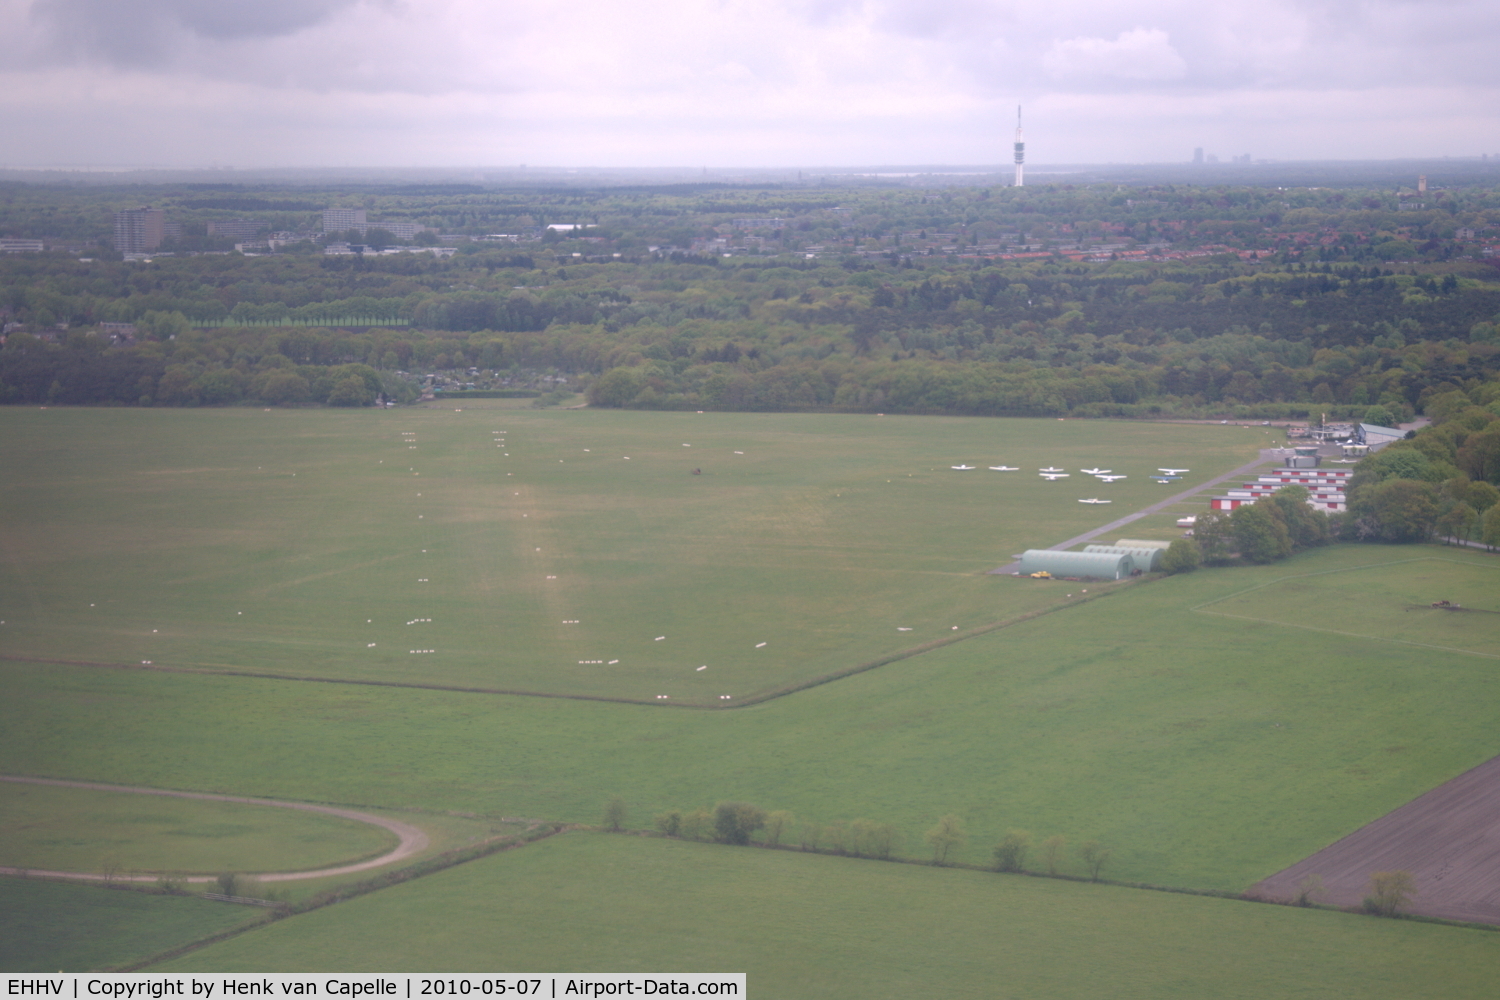 Hilversum Airport, Hilversum Netherlands (EHHV) - Hilversum Airfield in the Netherlands: approaching runway 36.